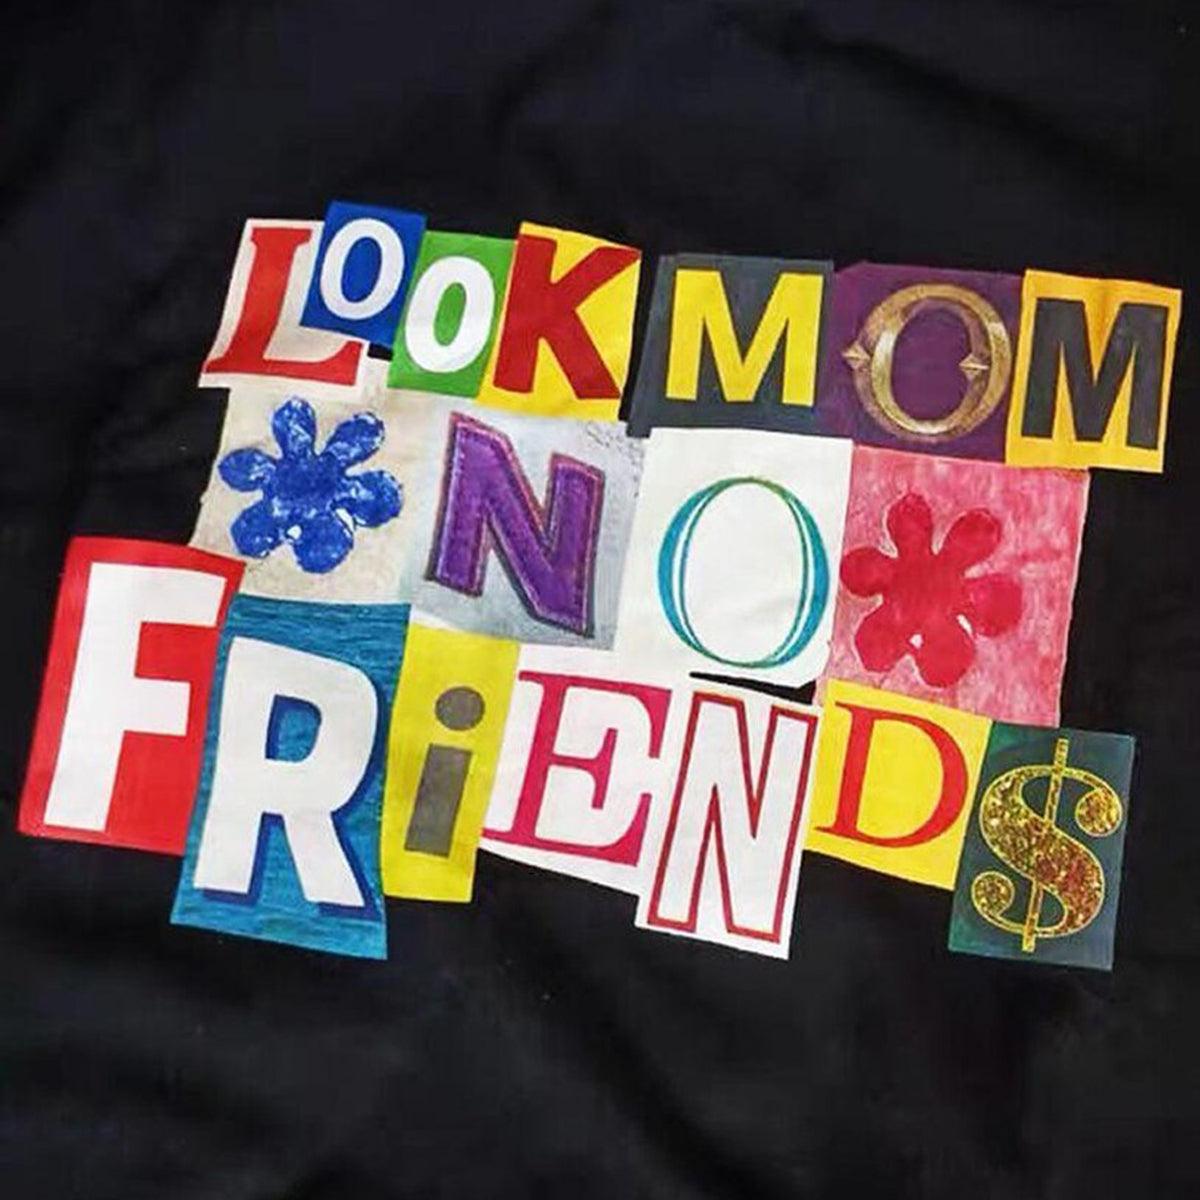 Look Mom No Friends T-Shirt - Aesthetic Clothes Shop